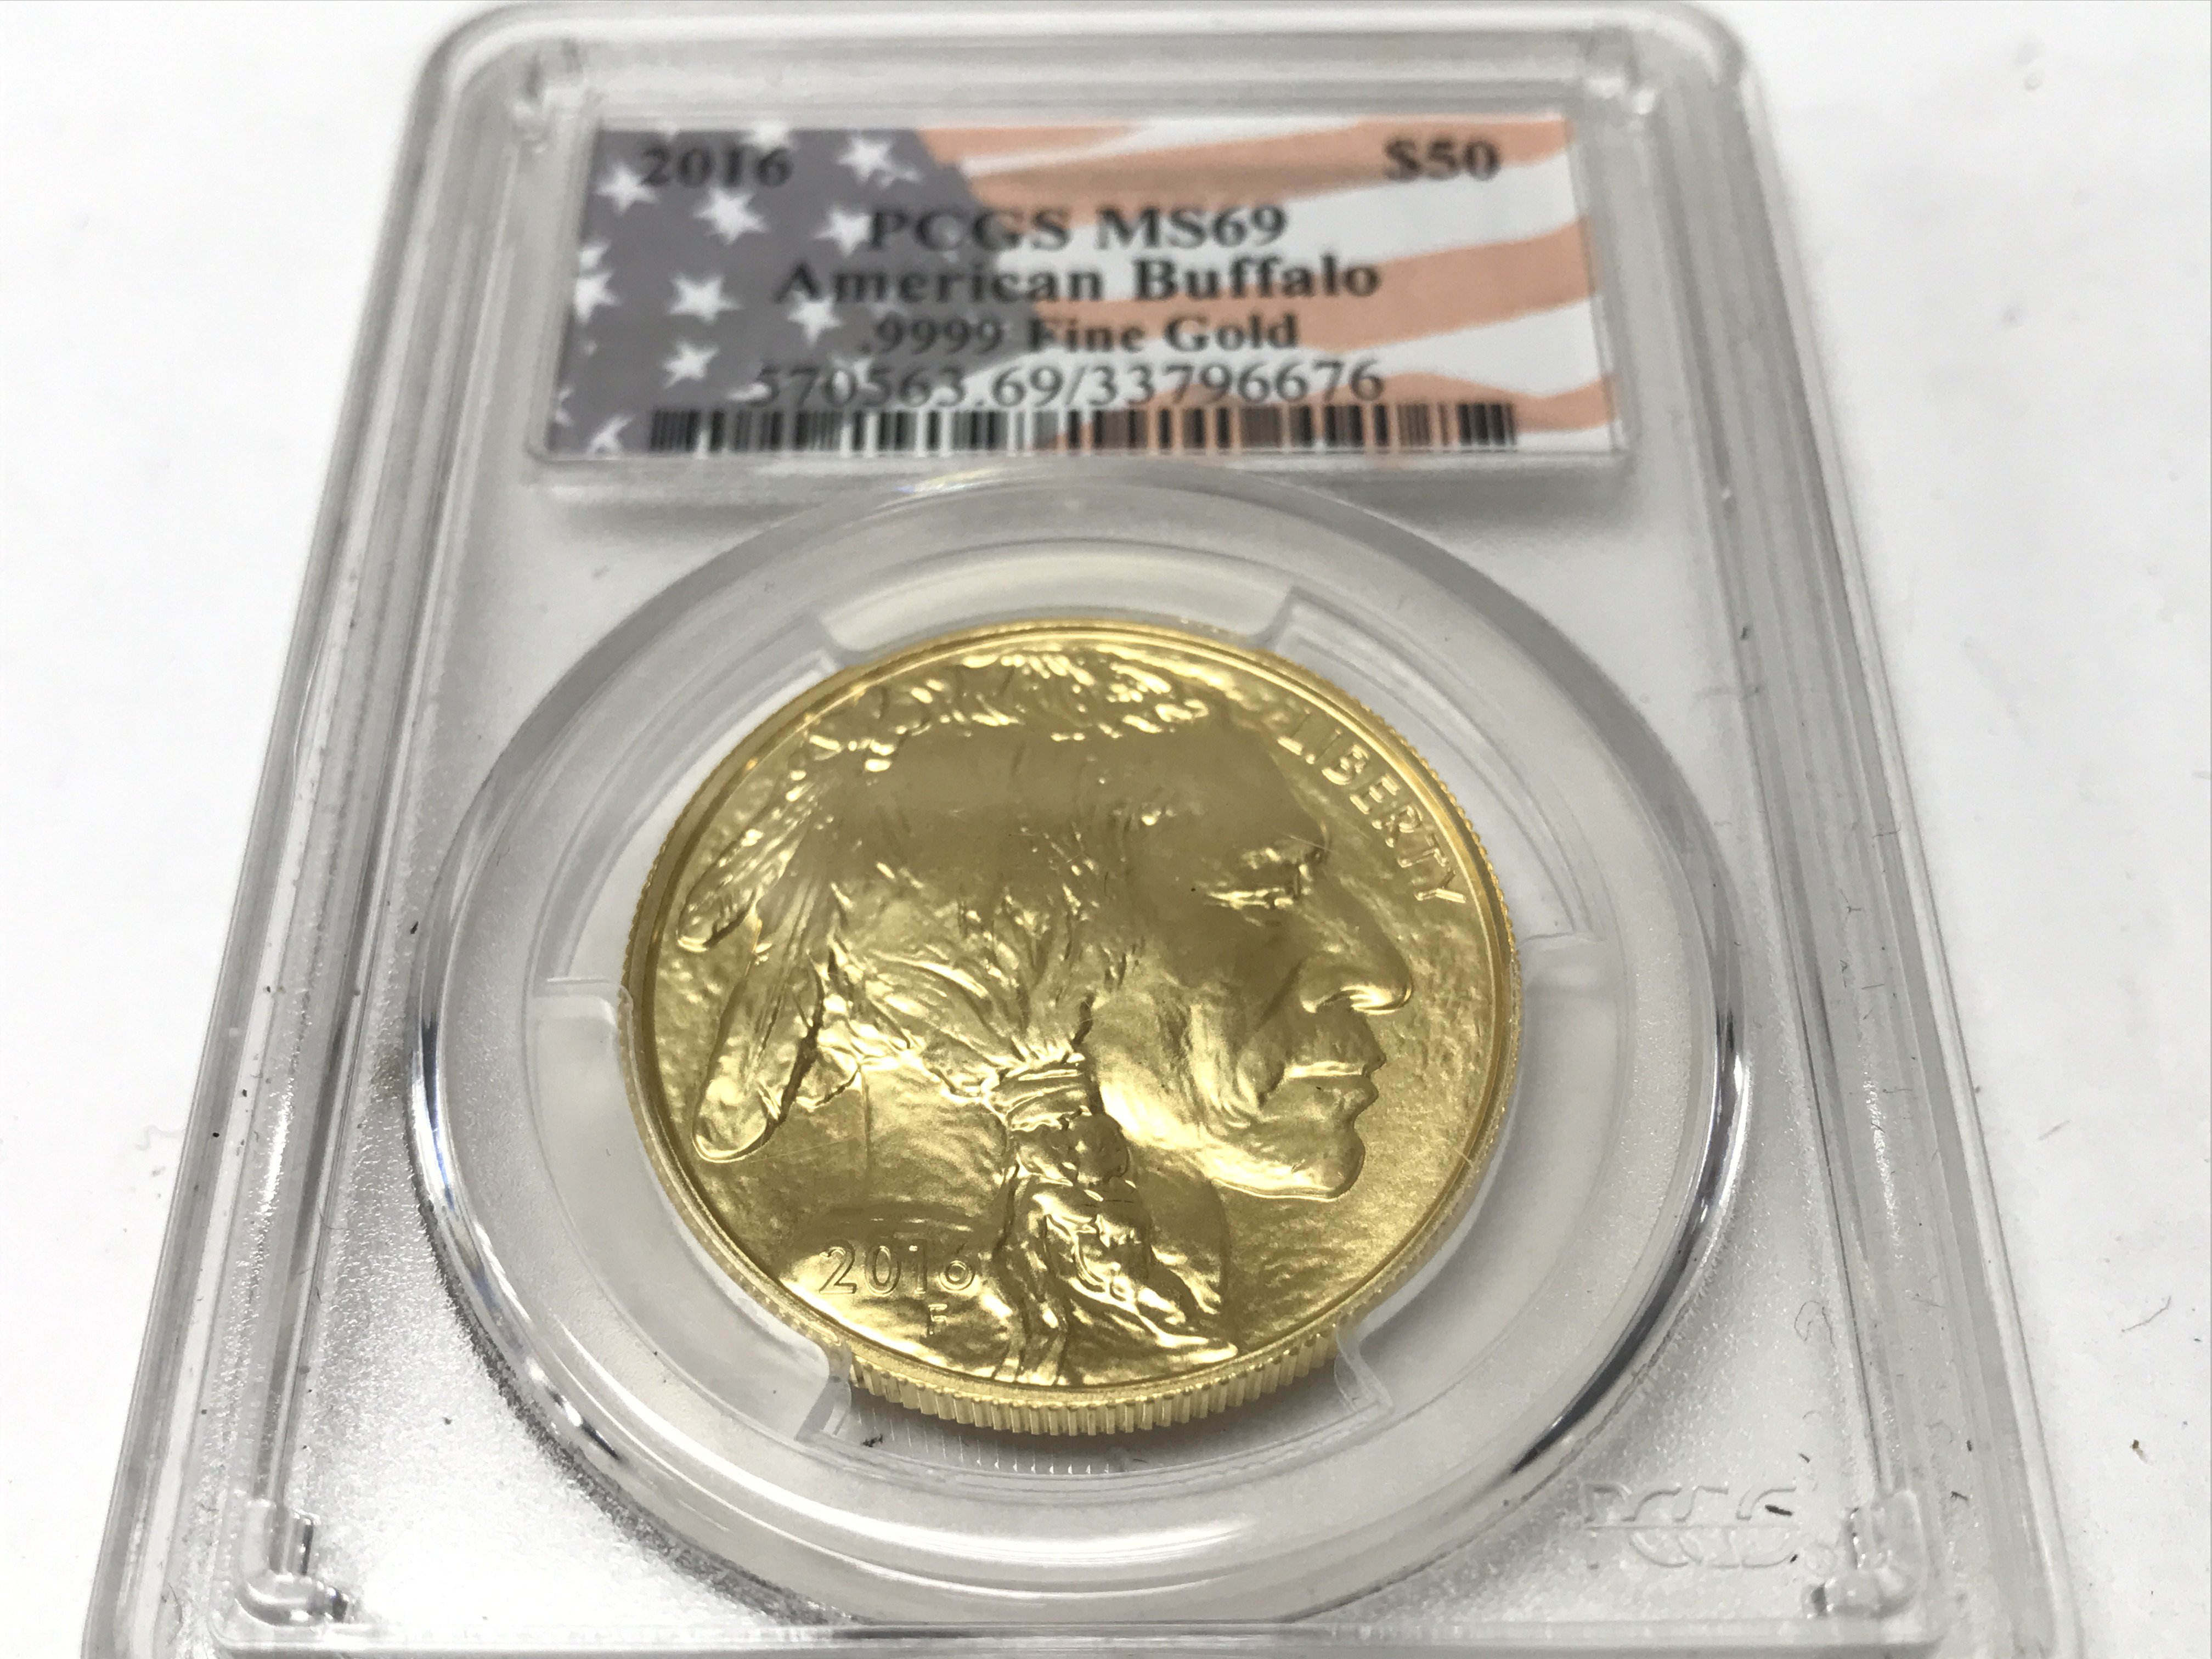 A 2016 gold 50 dollar American buffalo PCGS graded